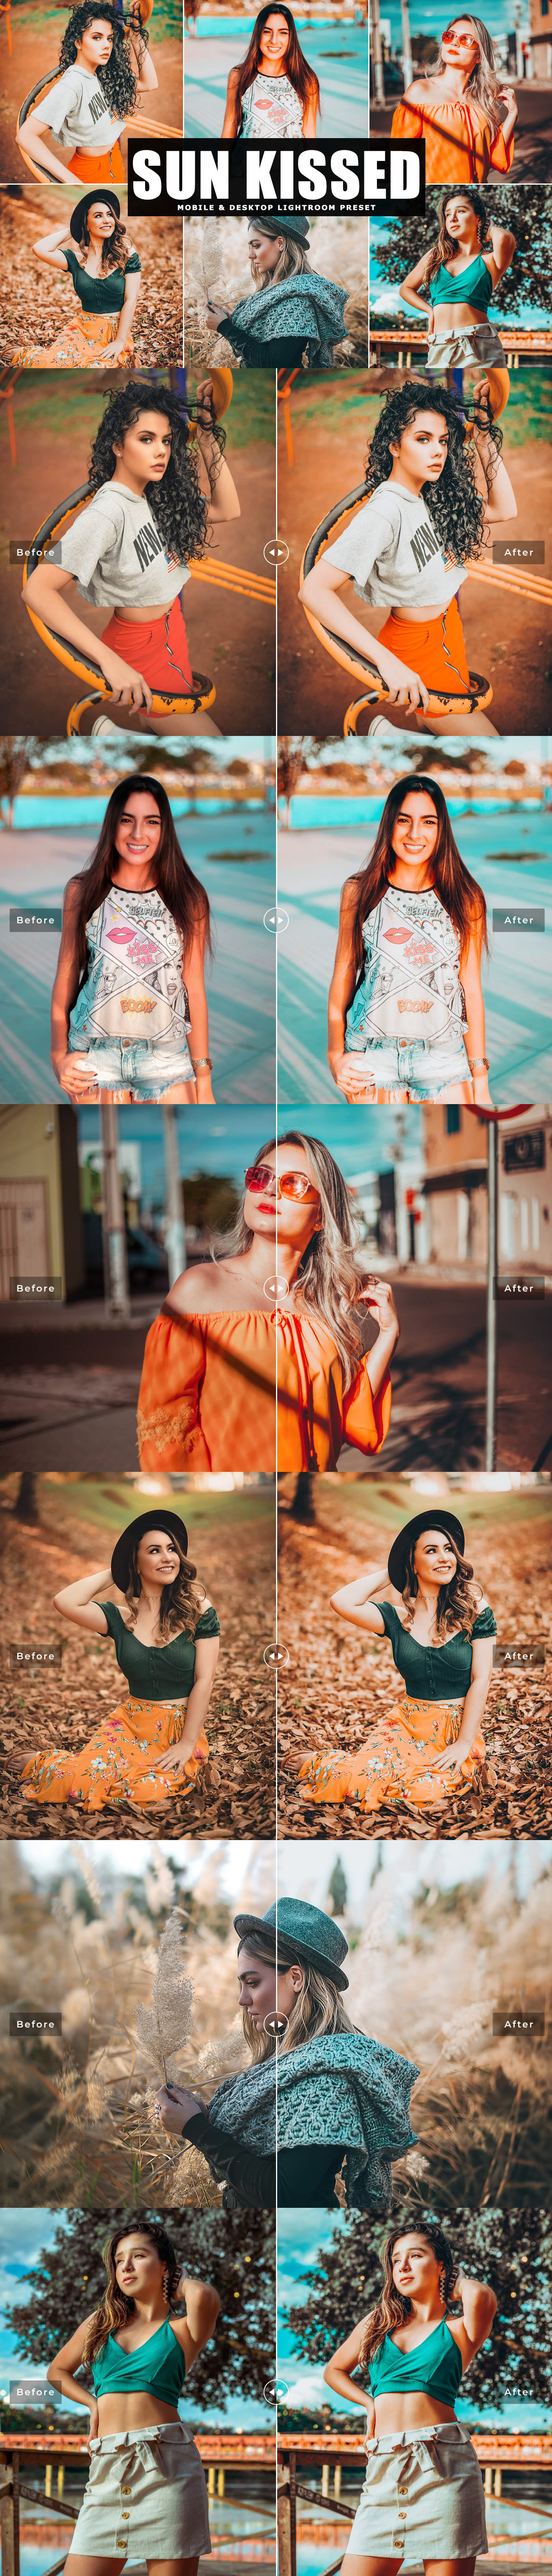 iphone preset vibrant tone clarity orange lovely preset portrait preset orange and teal sun kissed preset impressive preset